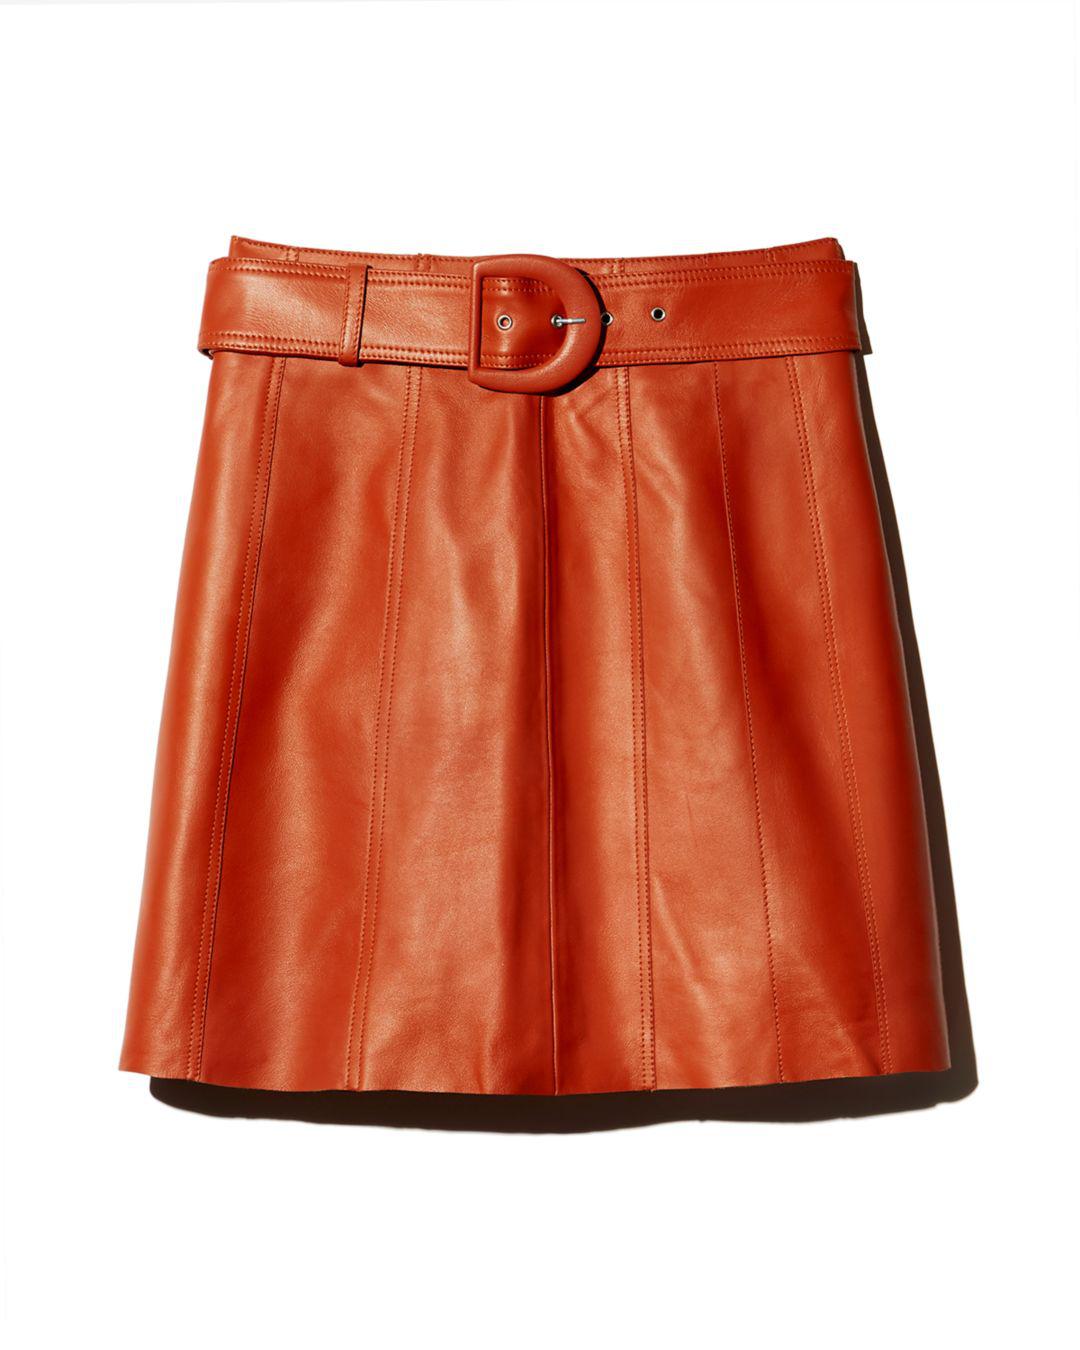 Lyst - Sandro Aubin Seamed Leather Mini Skirt in Orange